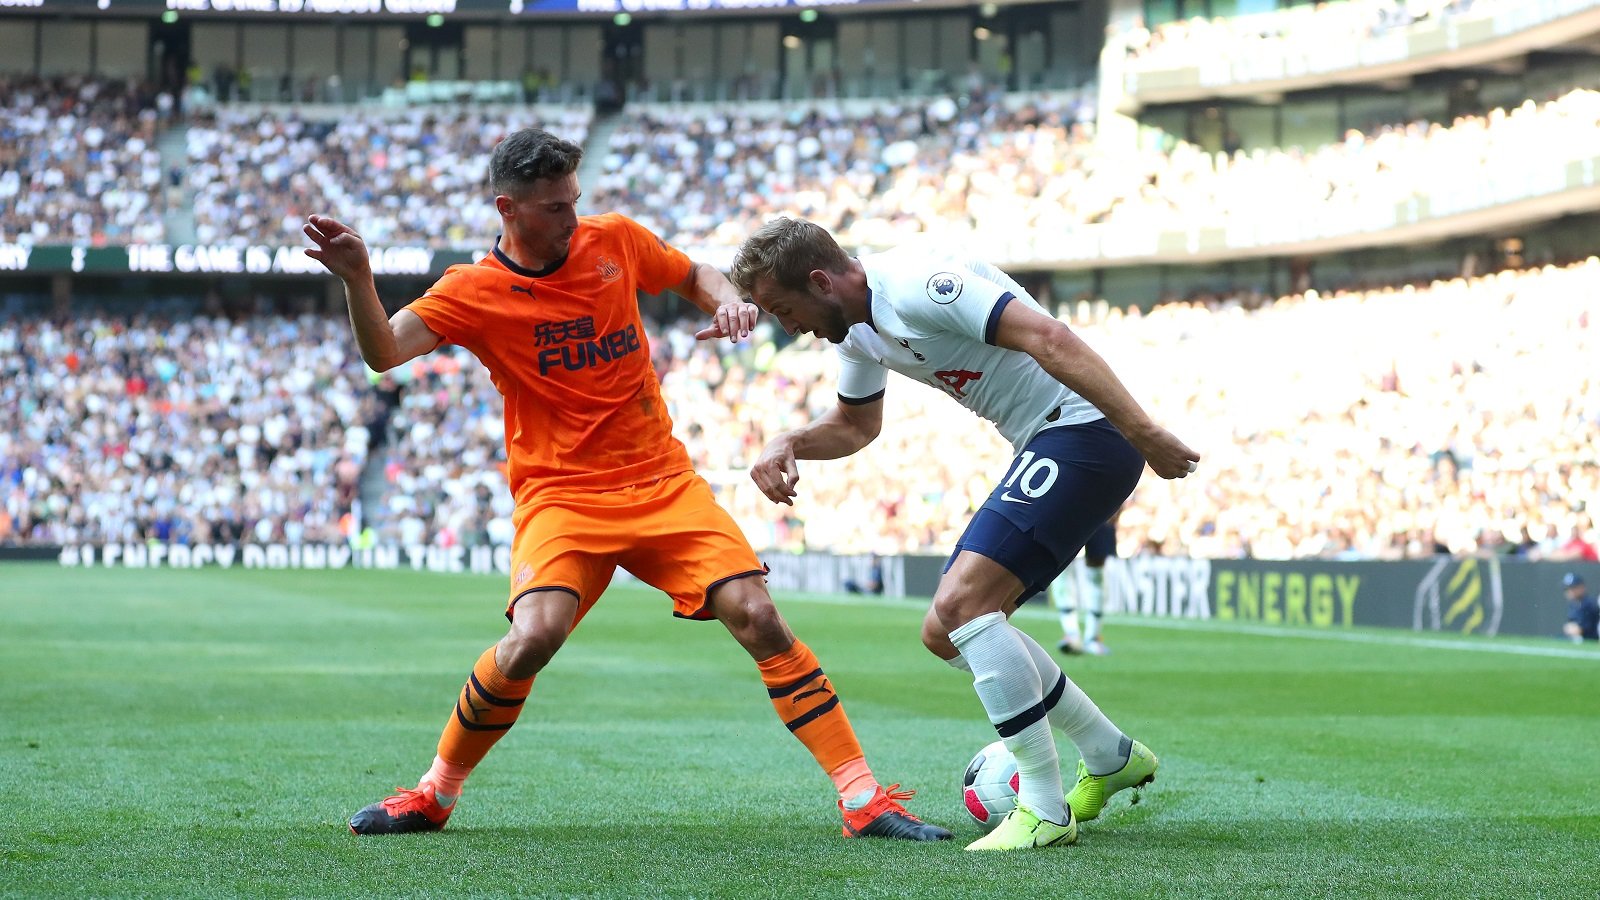 Striker sekaligus kapten Tottenham, Harry Kane tak mampu menembus pertahanan rapat Newcastle di pertandingan ini. (Foto: Twitter/@NUFC)